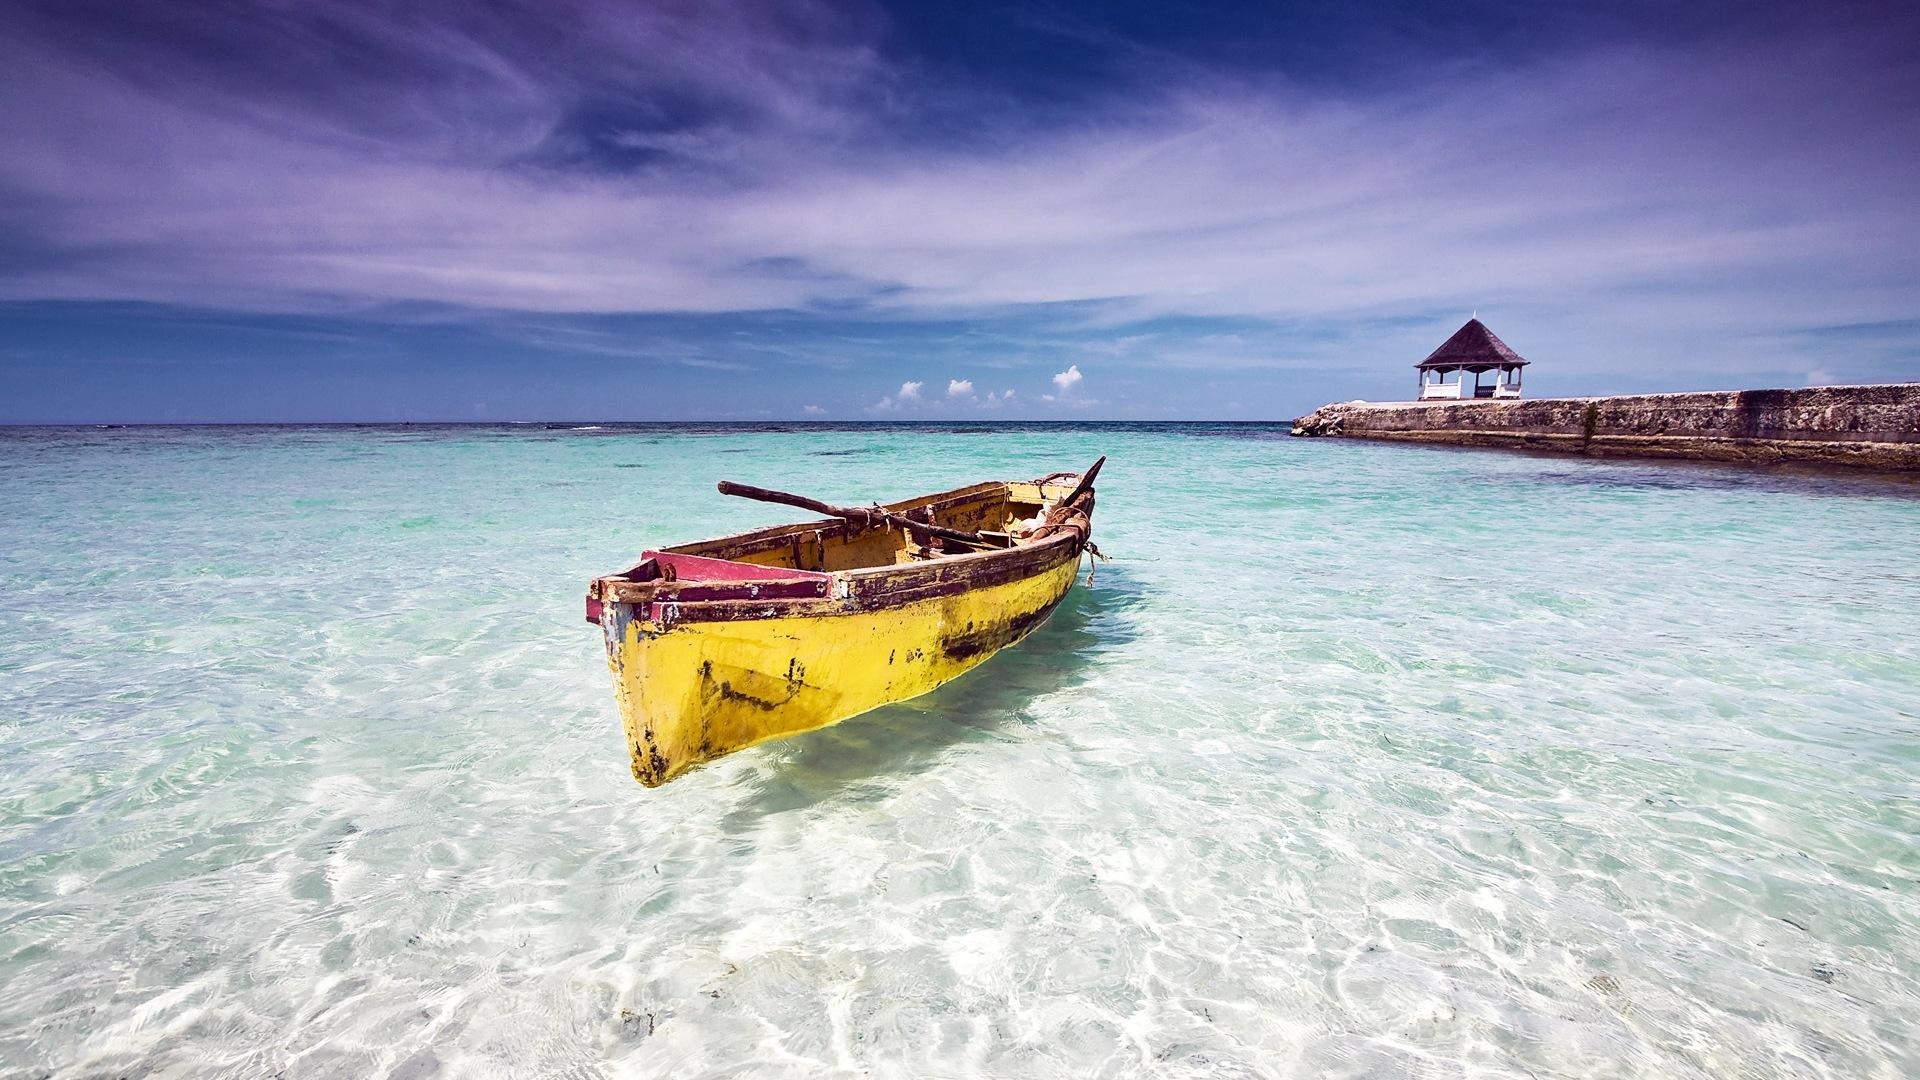 Caribbean Sea, Crystal clear, Tropical paradise, Idyllic getaway, 1920x1080 Full HD Desktop